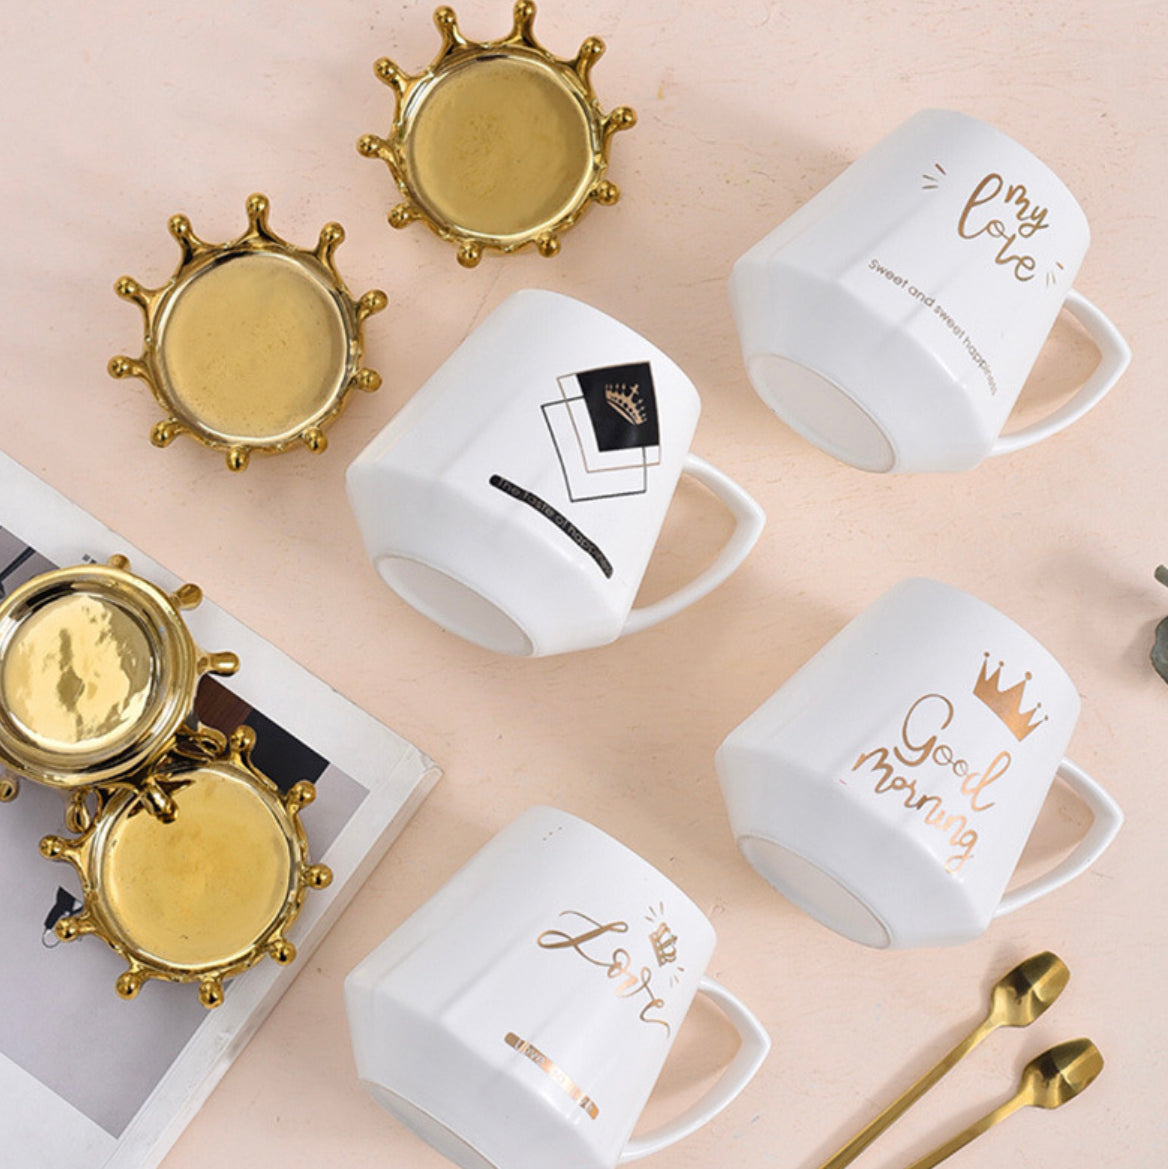 Coffee Mug Warmer with Mug, Regal Crown Lid and Spoon Included